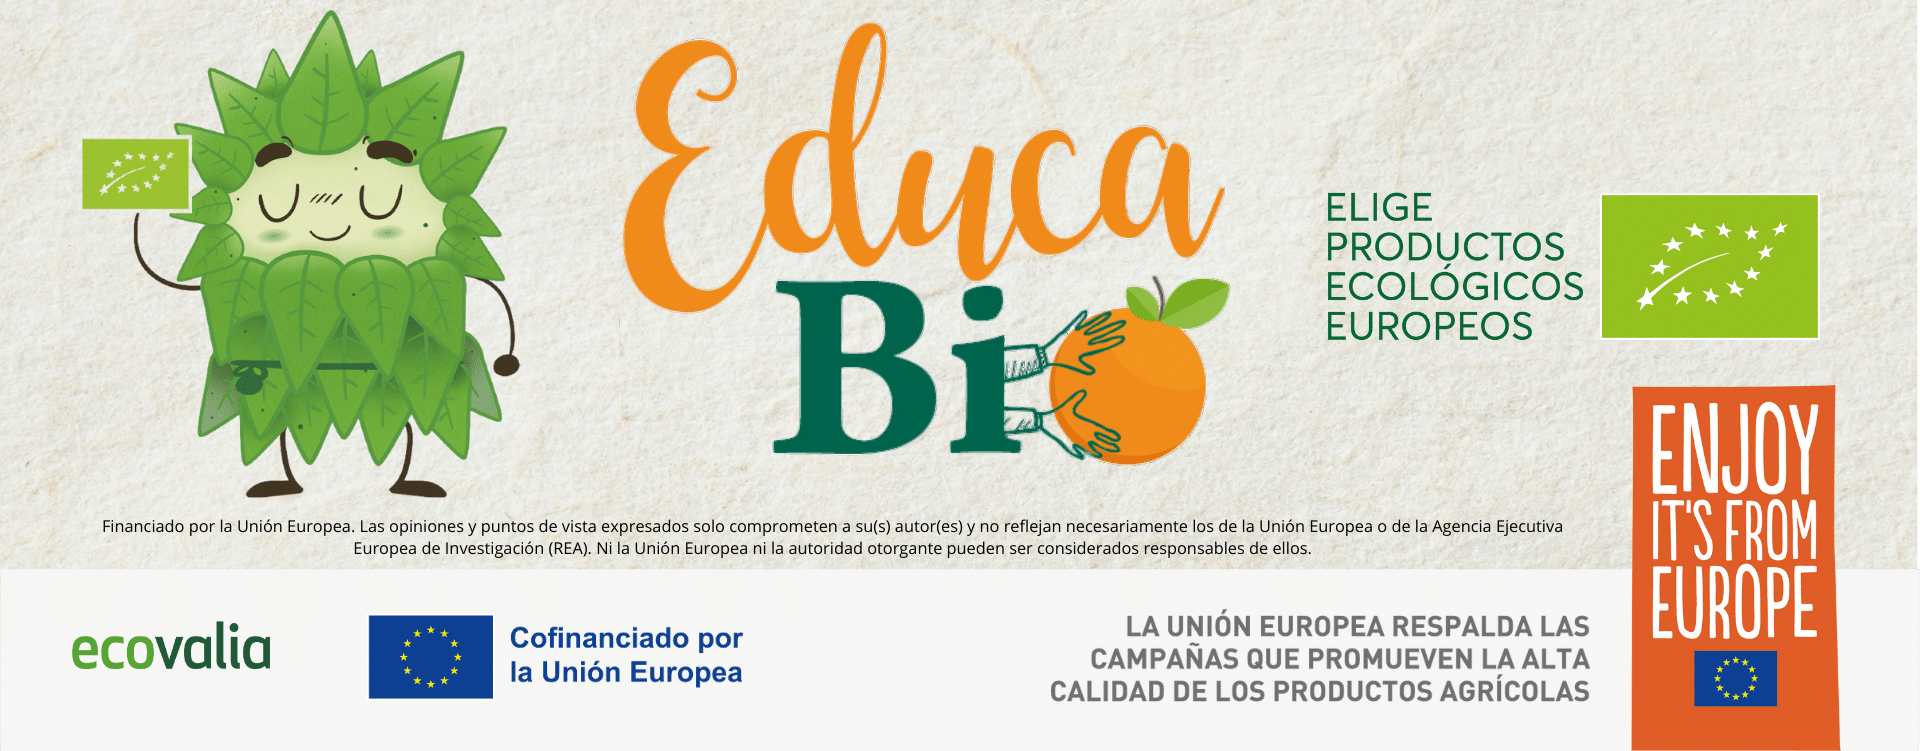 Ecovalia launches new round of EducaBio workshops